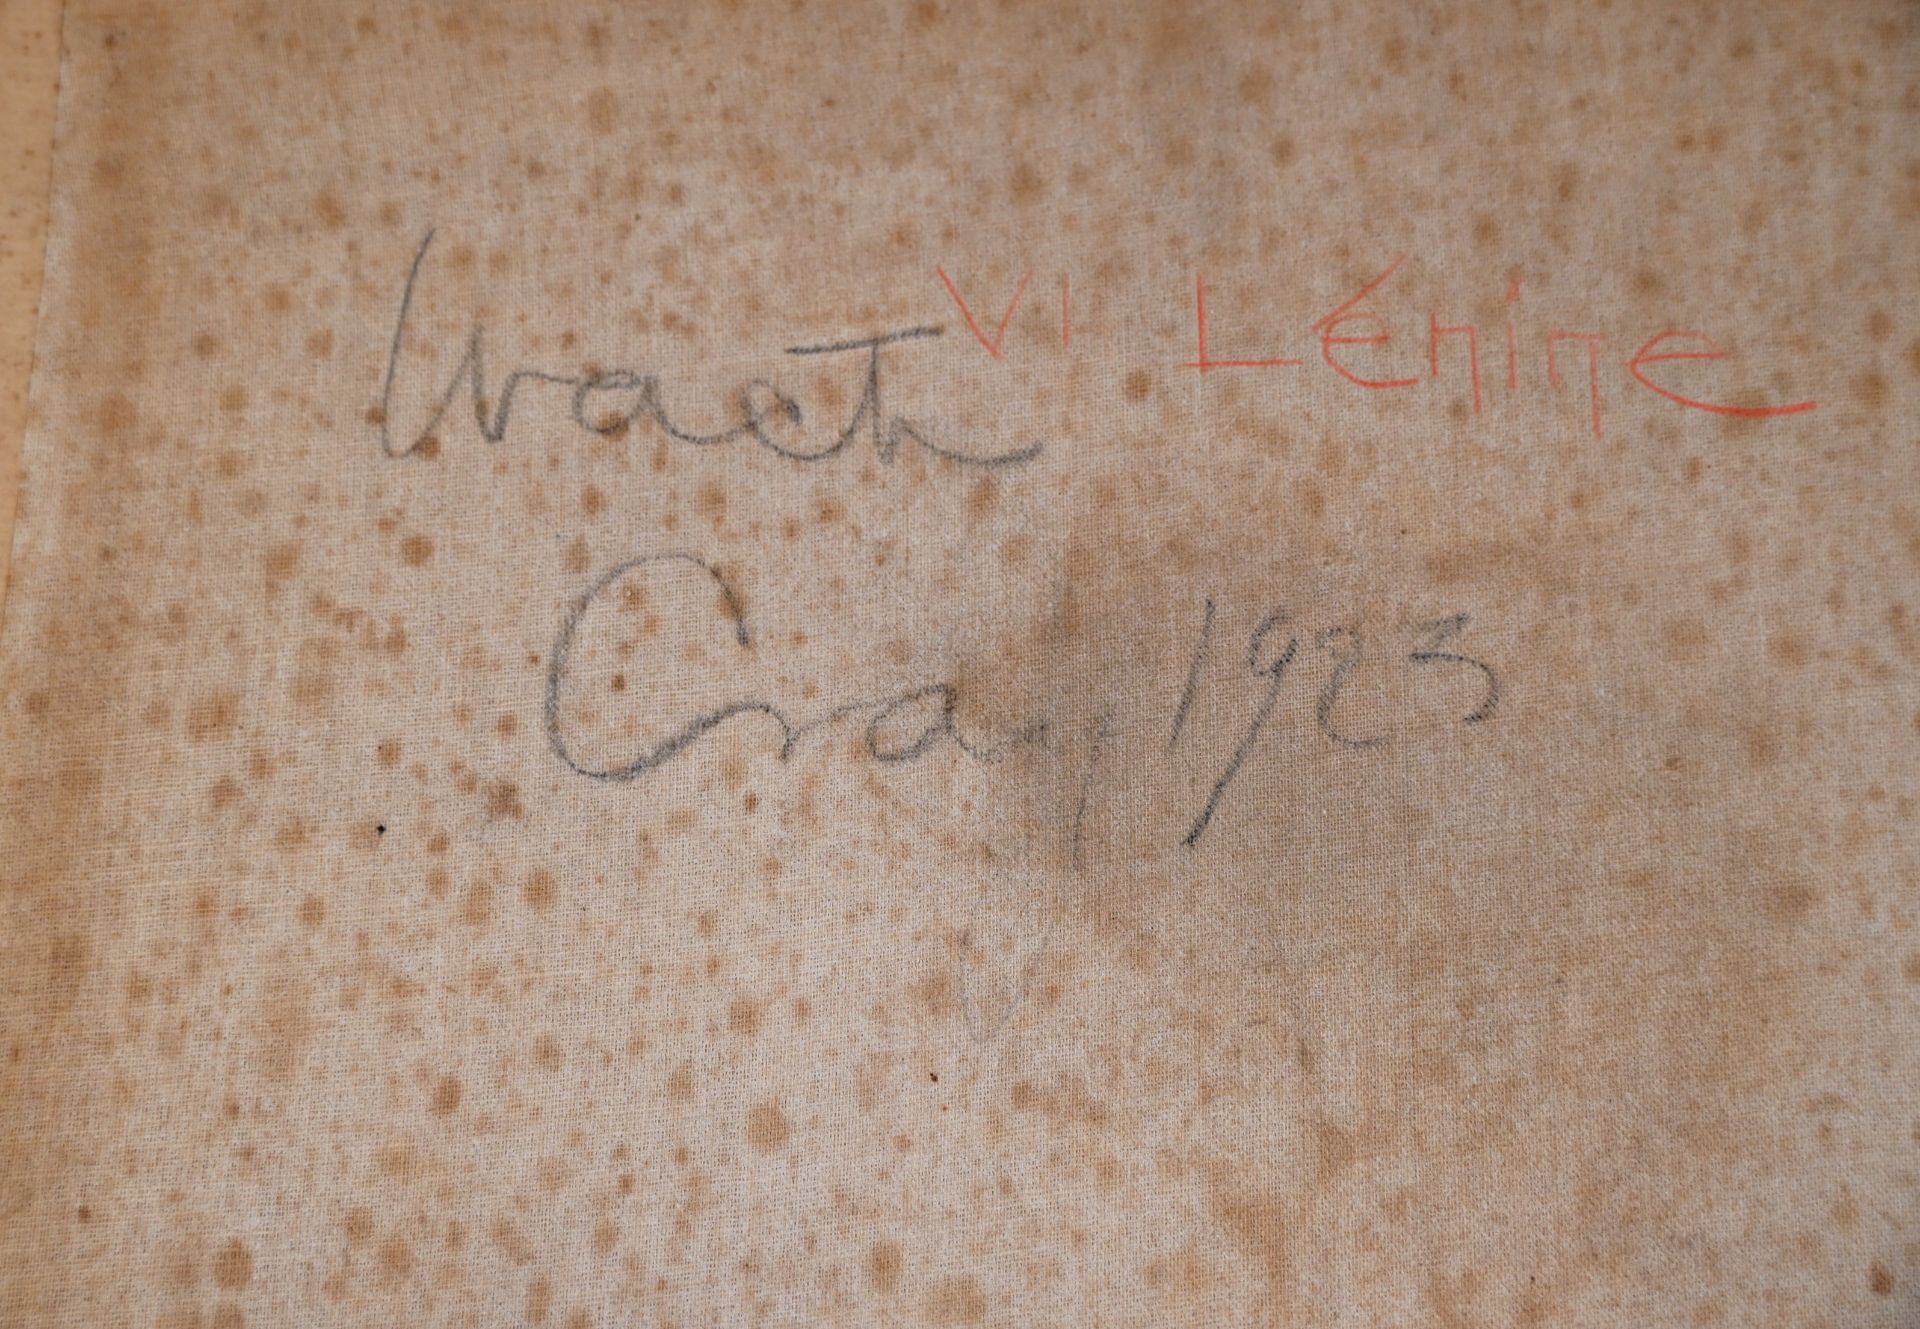 Drawing for Nikolai Tikhonov's book "BRAGA", 1922. Paper, charcoal drawing. Author's signature. - Image 8 of 9